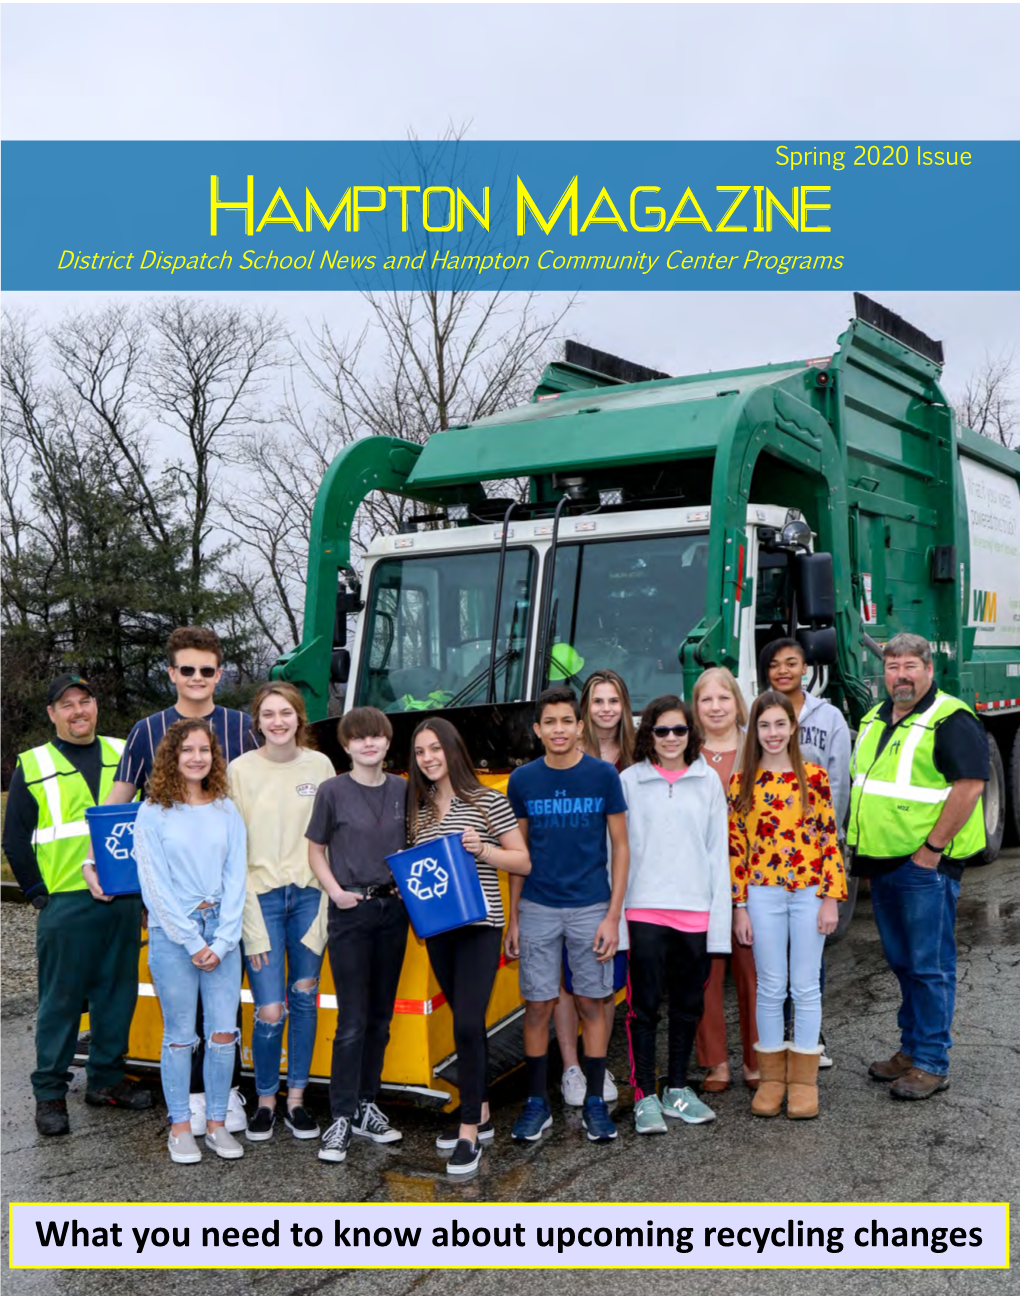 Hampton Magazine District Dispatch School News and Hampton Community Center Programs